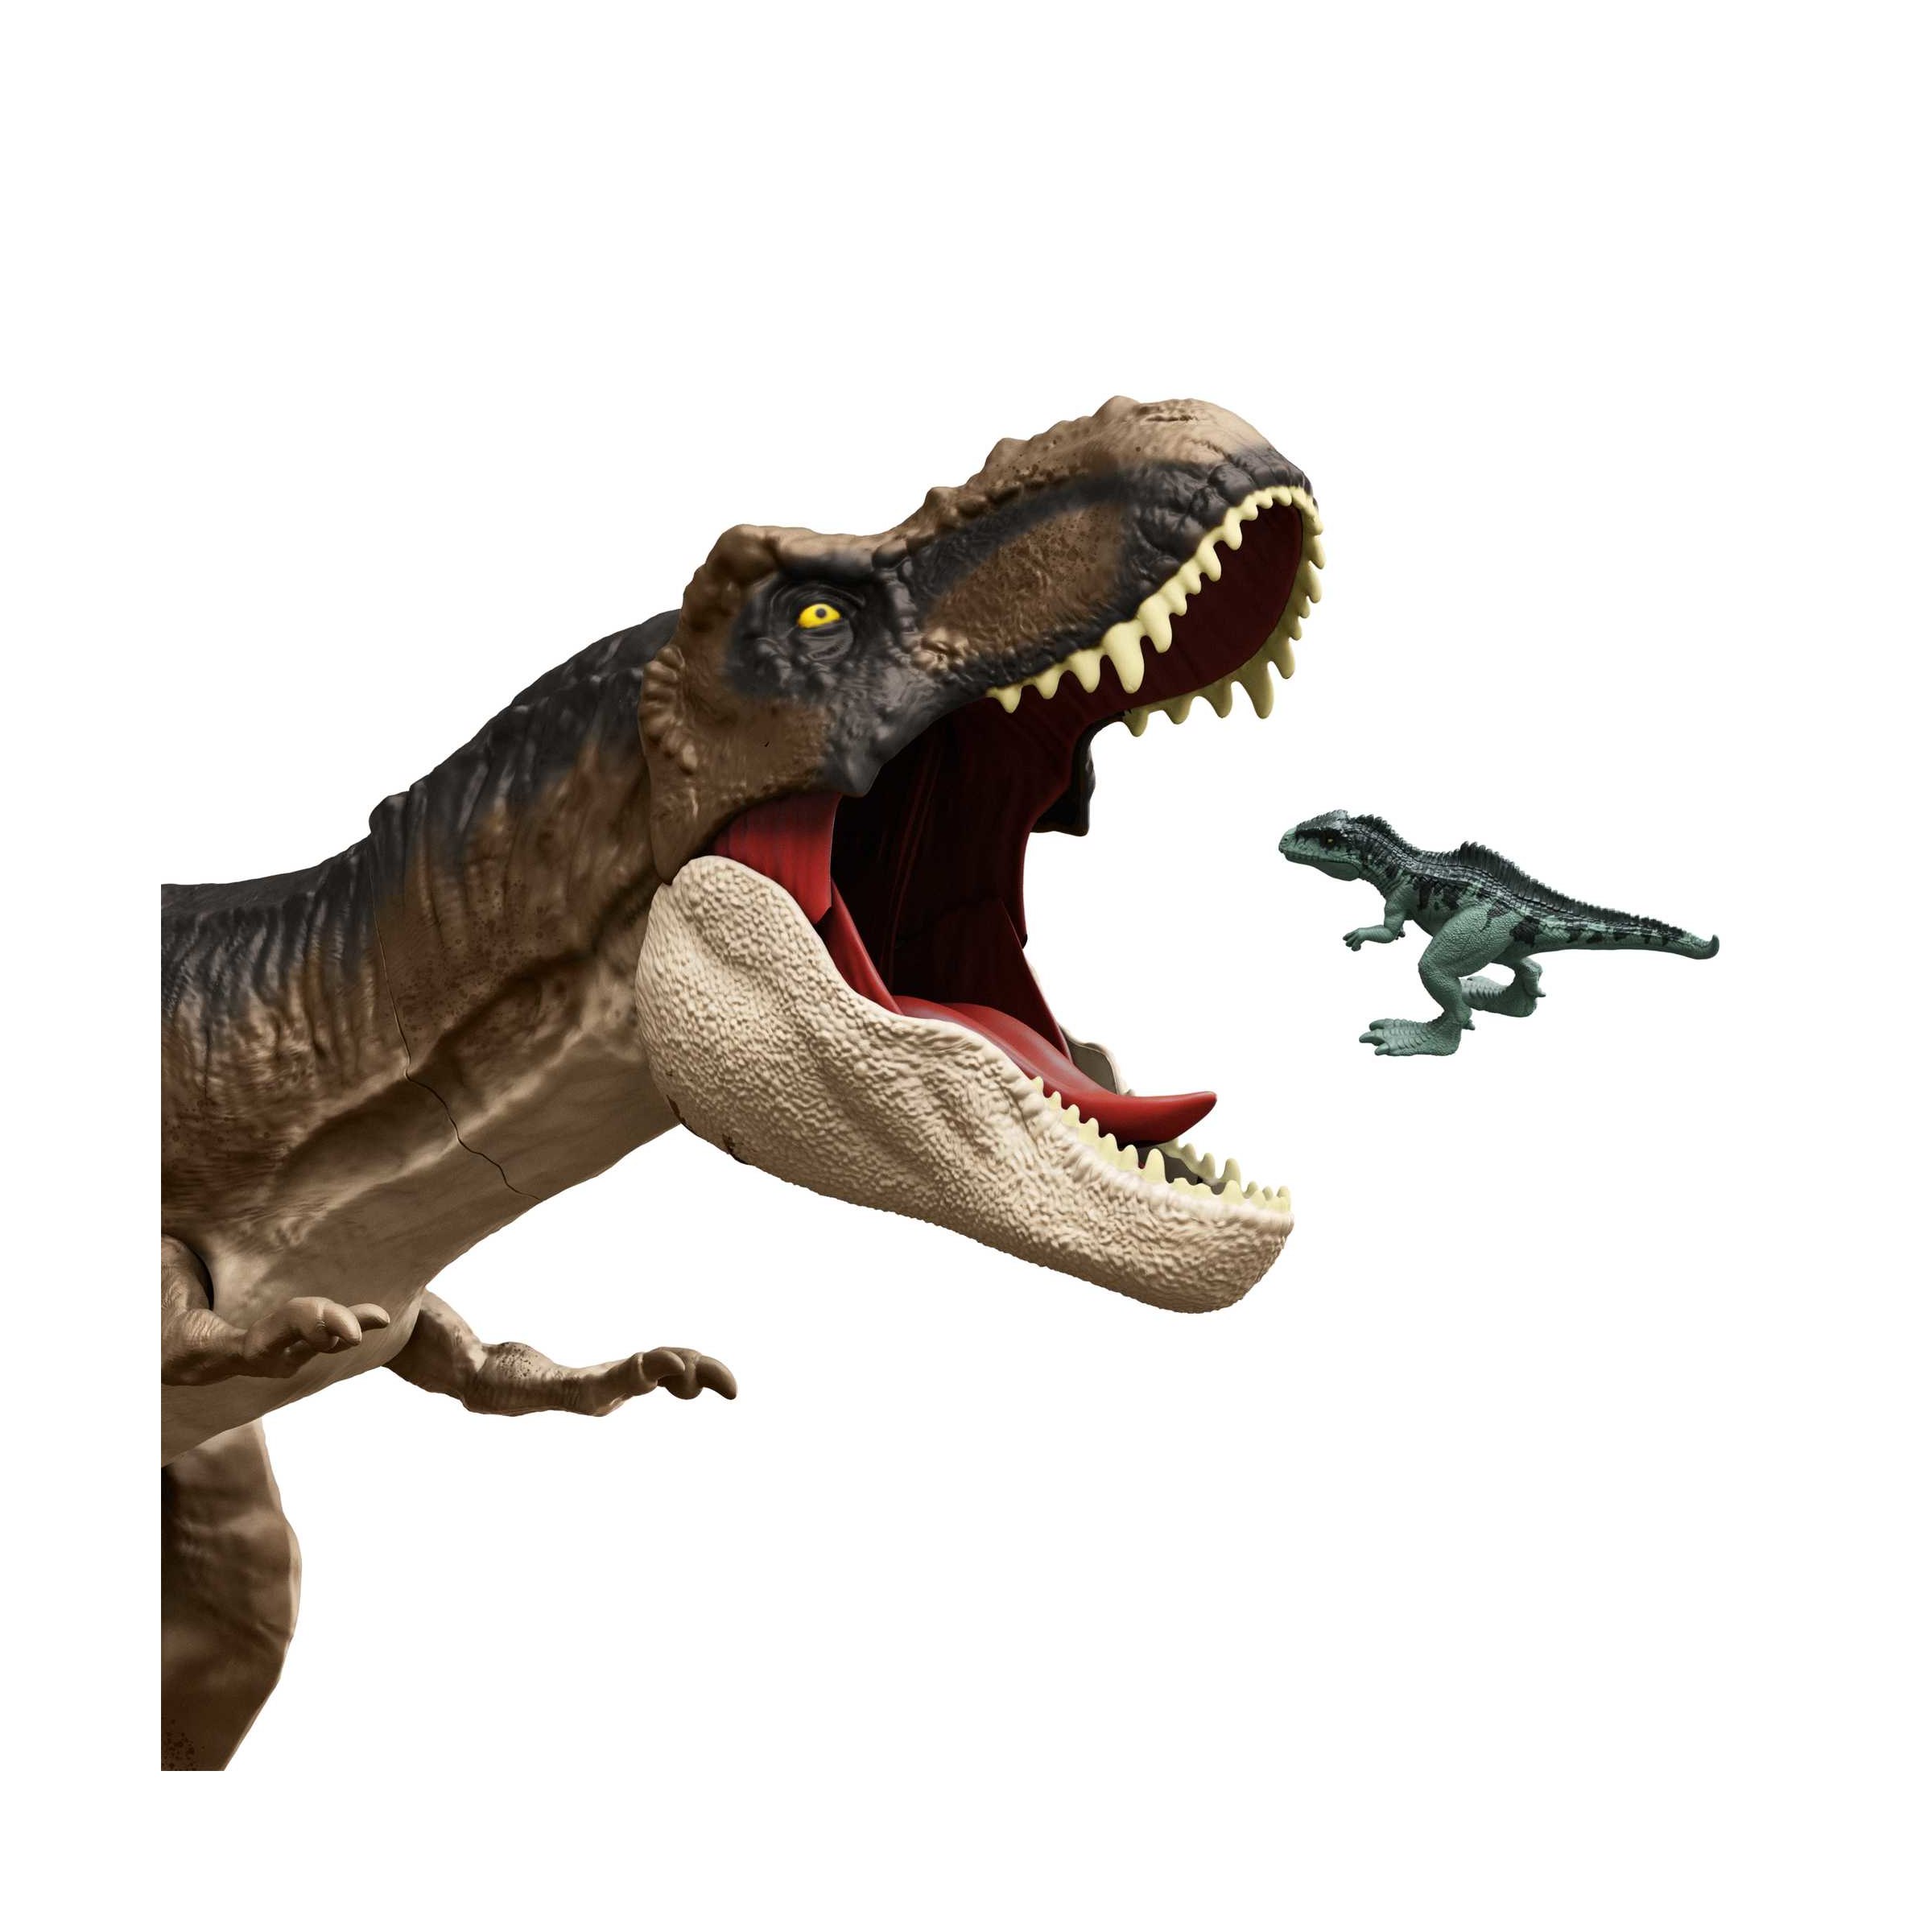 Jurassic world, super colossal tirannosauro rex snodato, giocattolo per bambini 4+ anni, hbk73 - Jurassic World